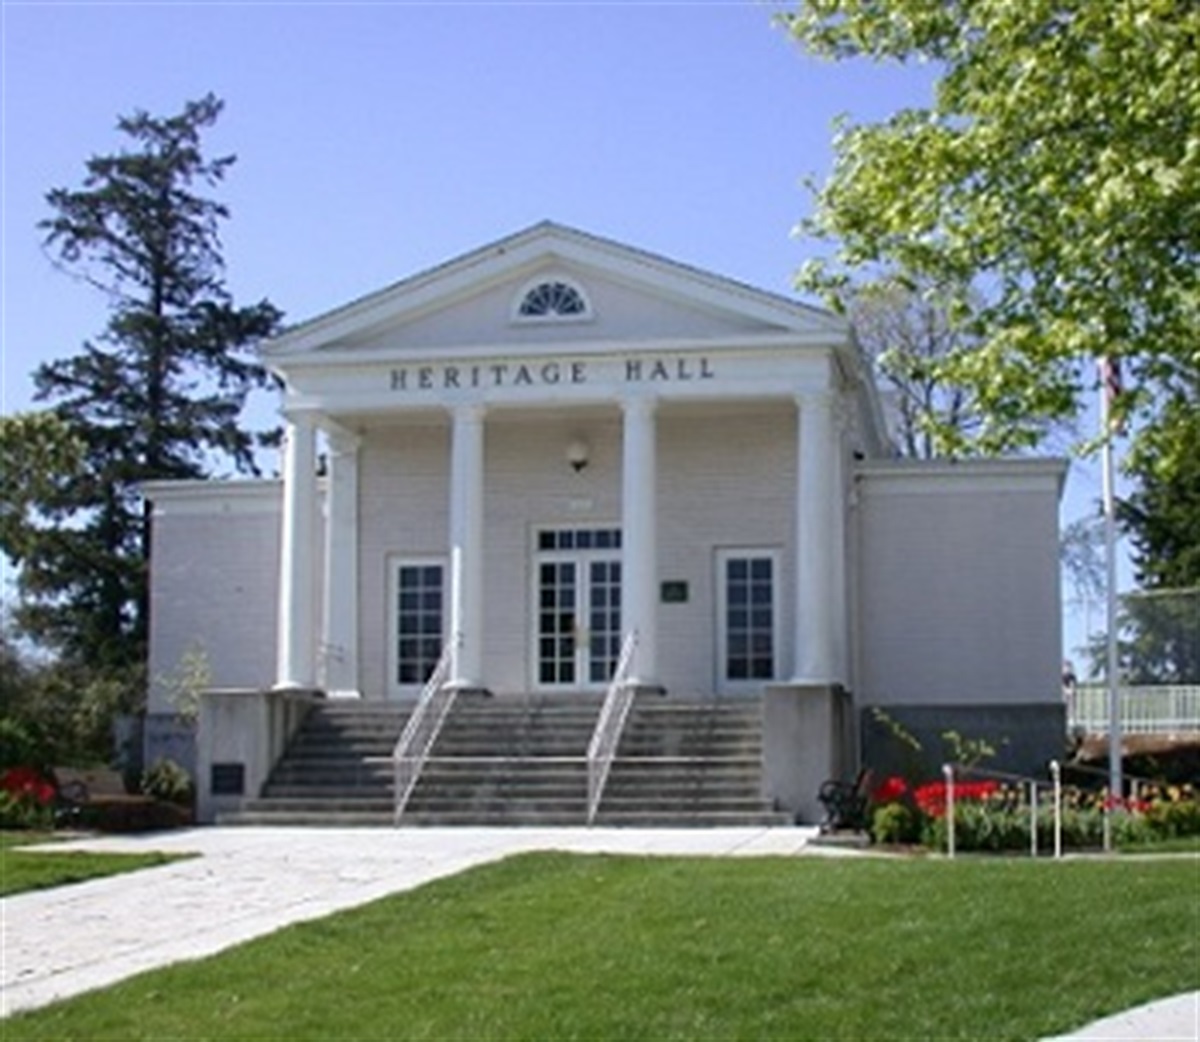 Heritage Hall and Centennial Gardens City of Kirkland